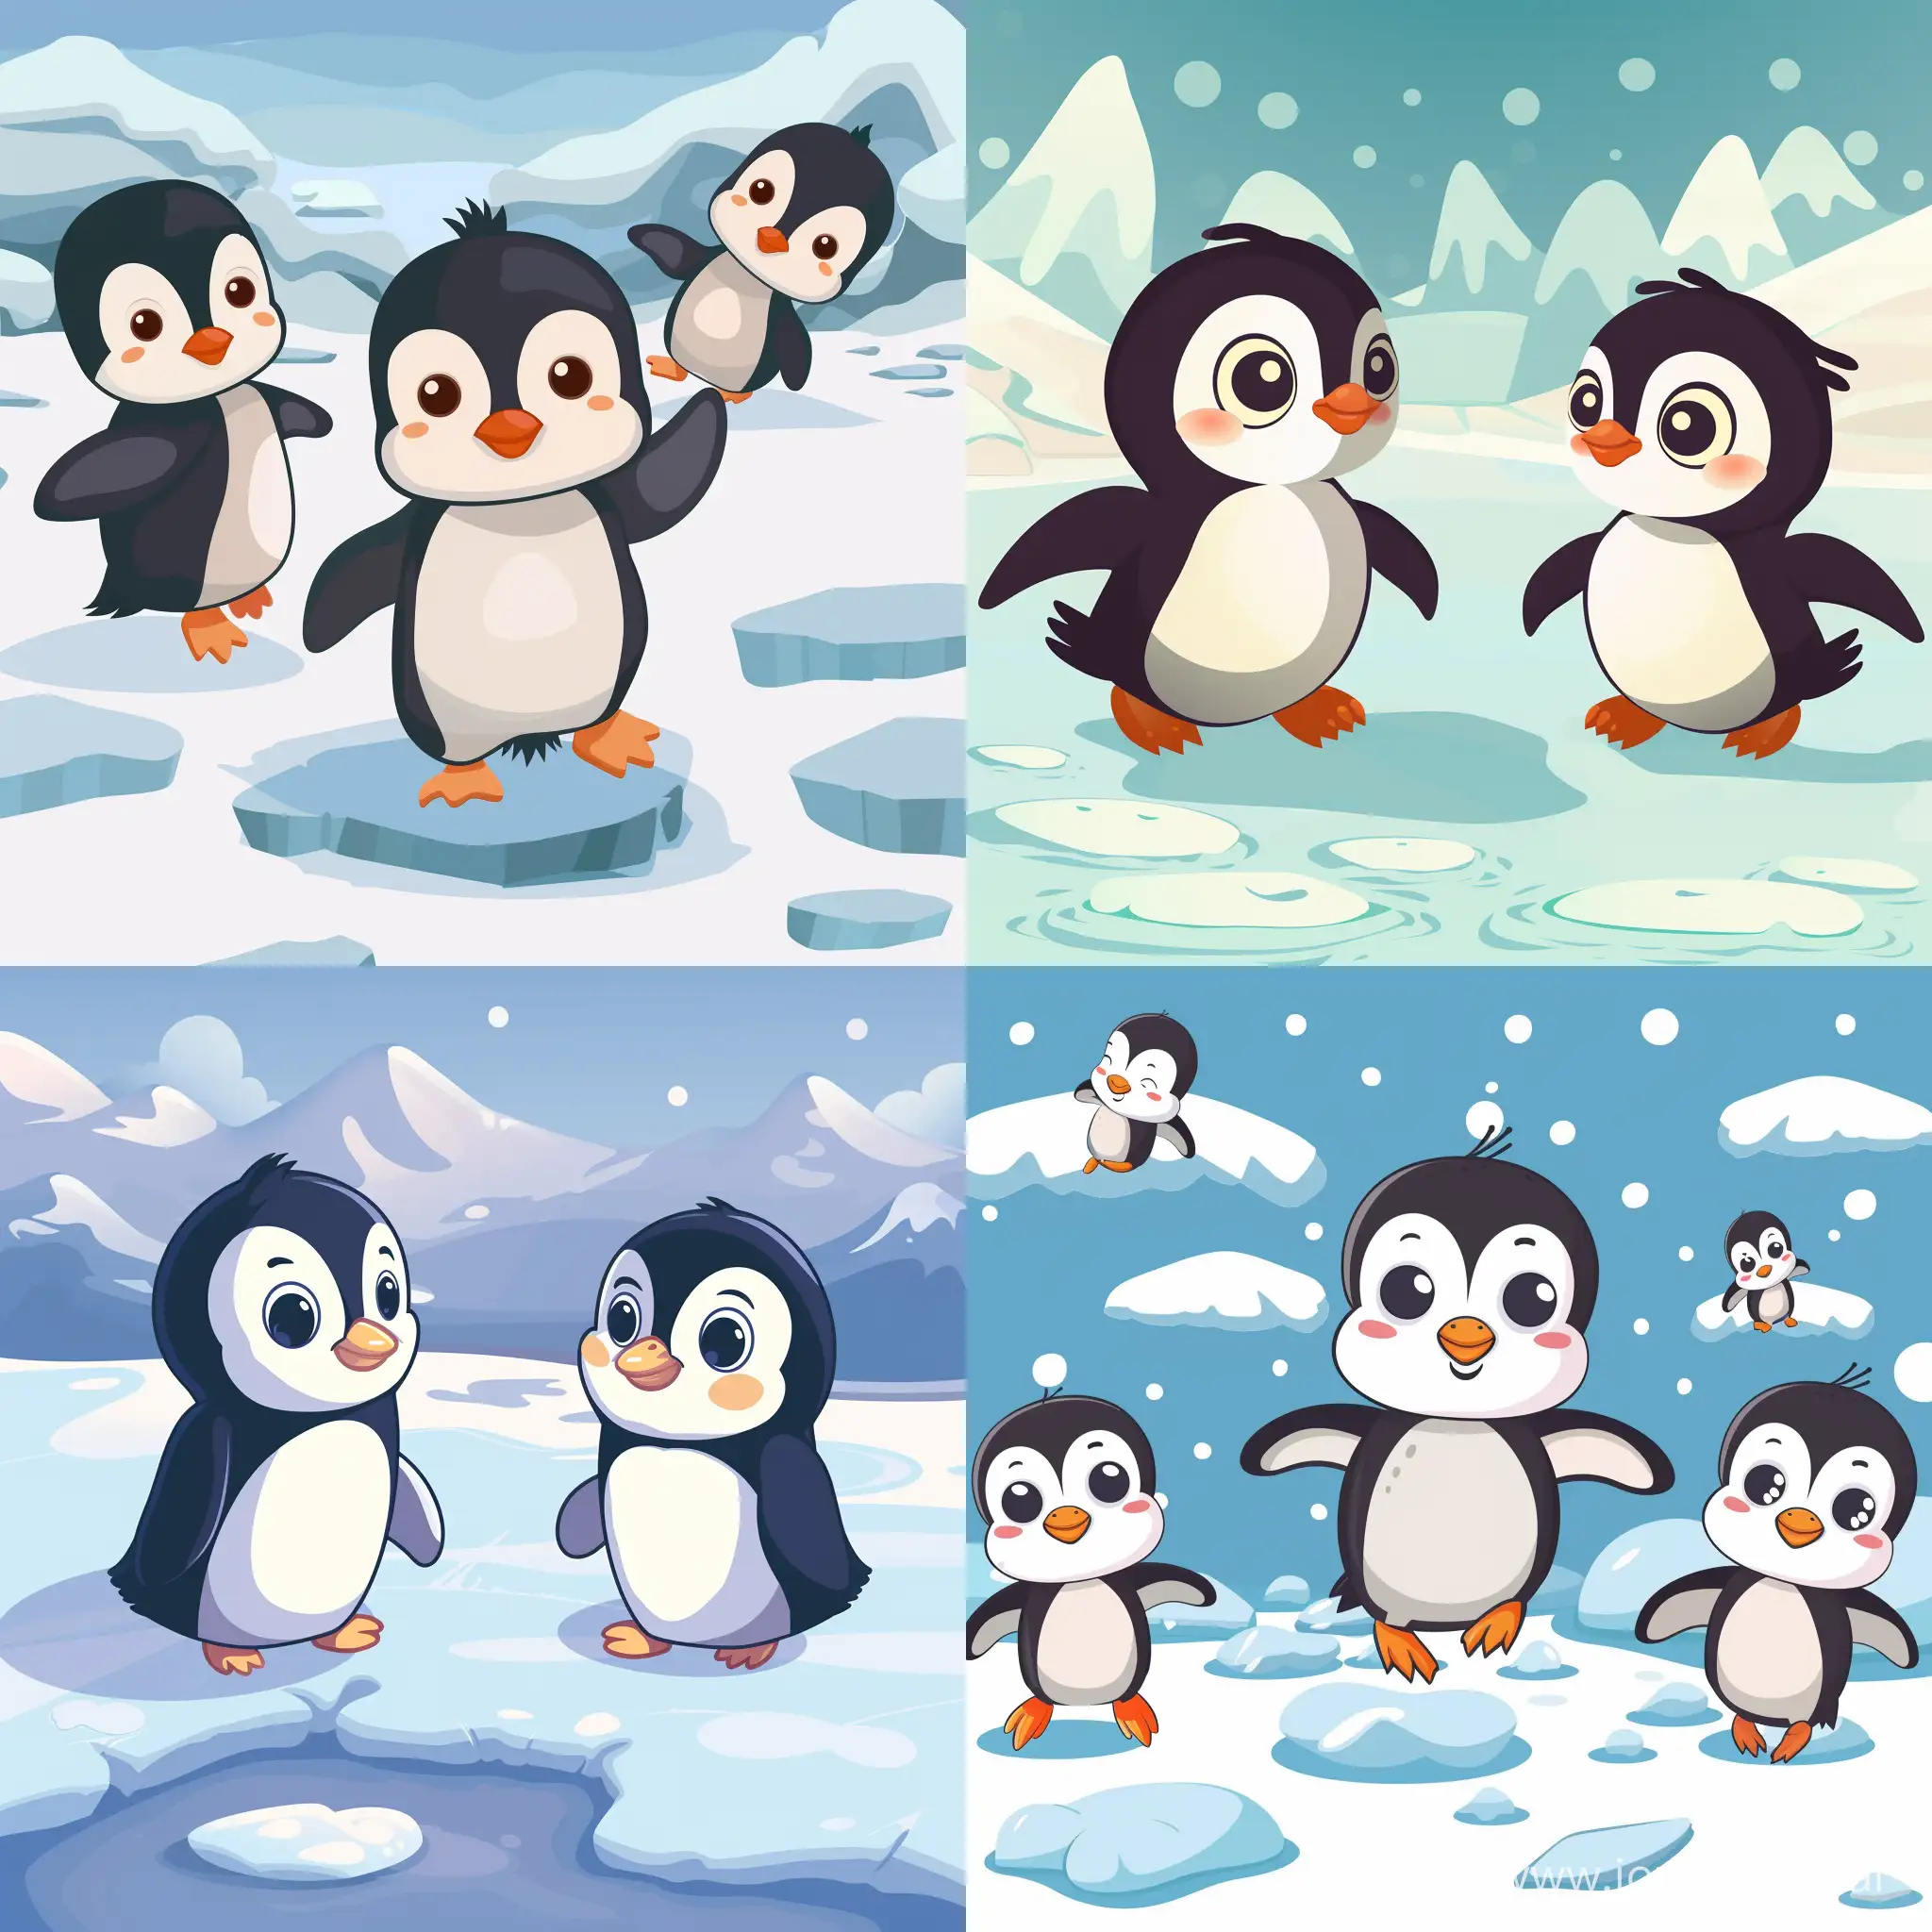 cartoon baby penguins on ice, in flat style